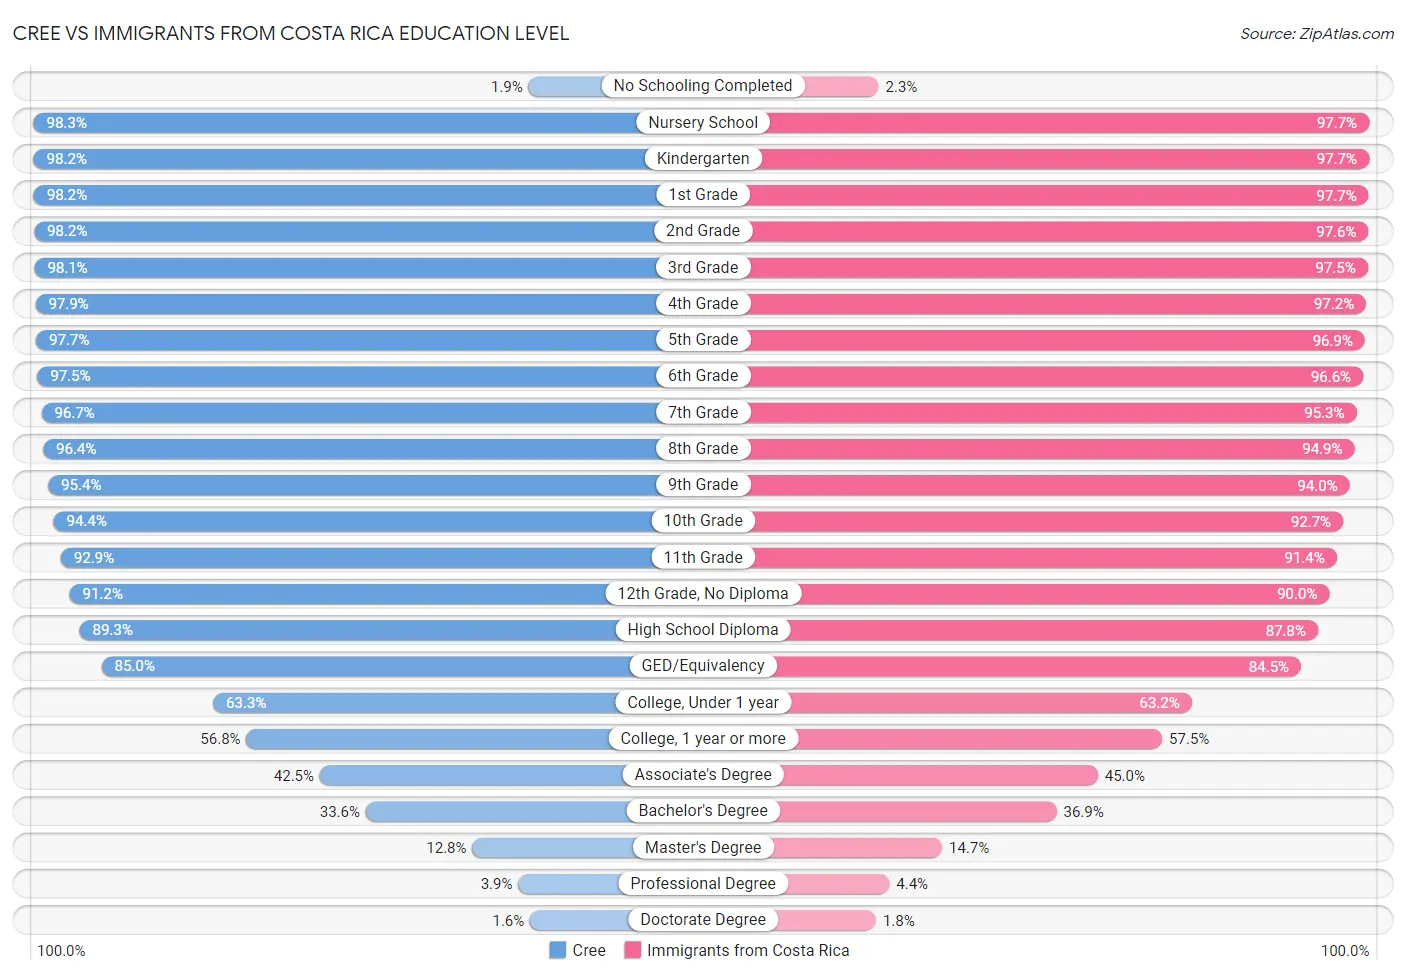 Cree vs Immigrants from Costa Rica Education Level